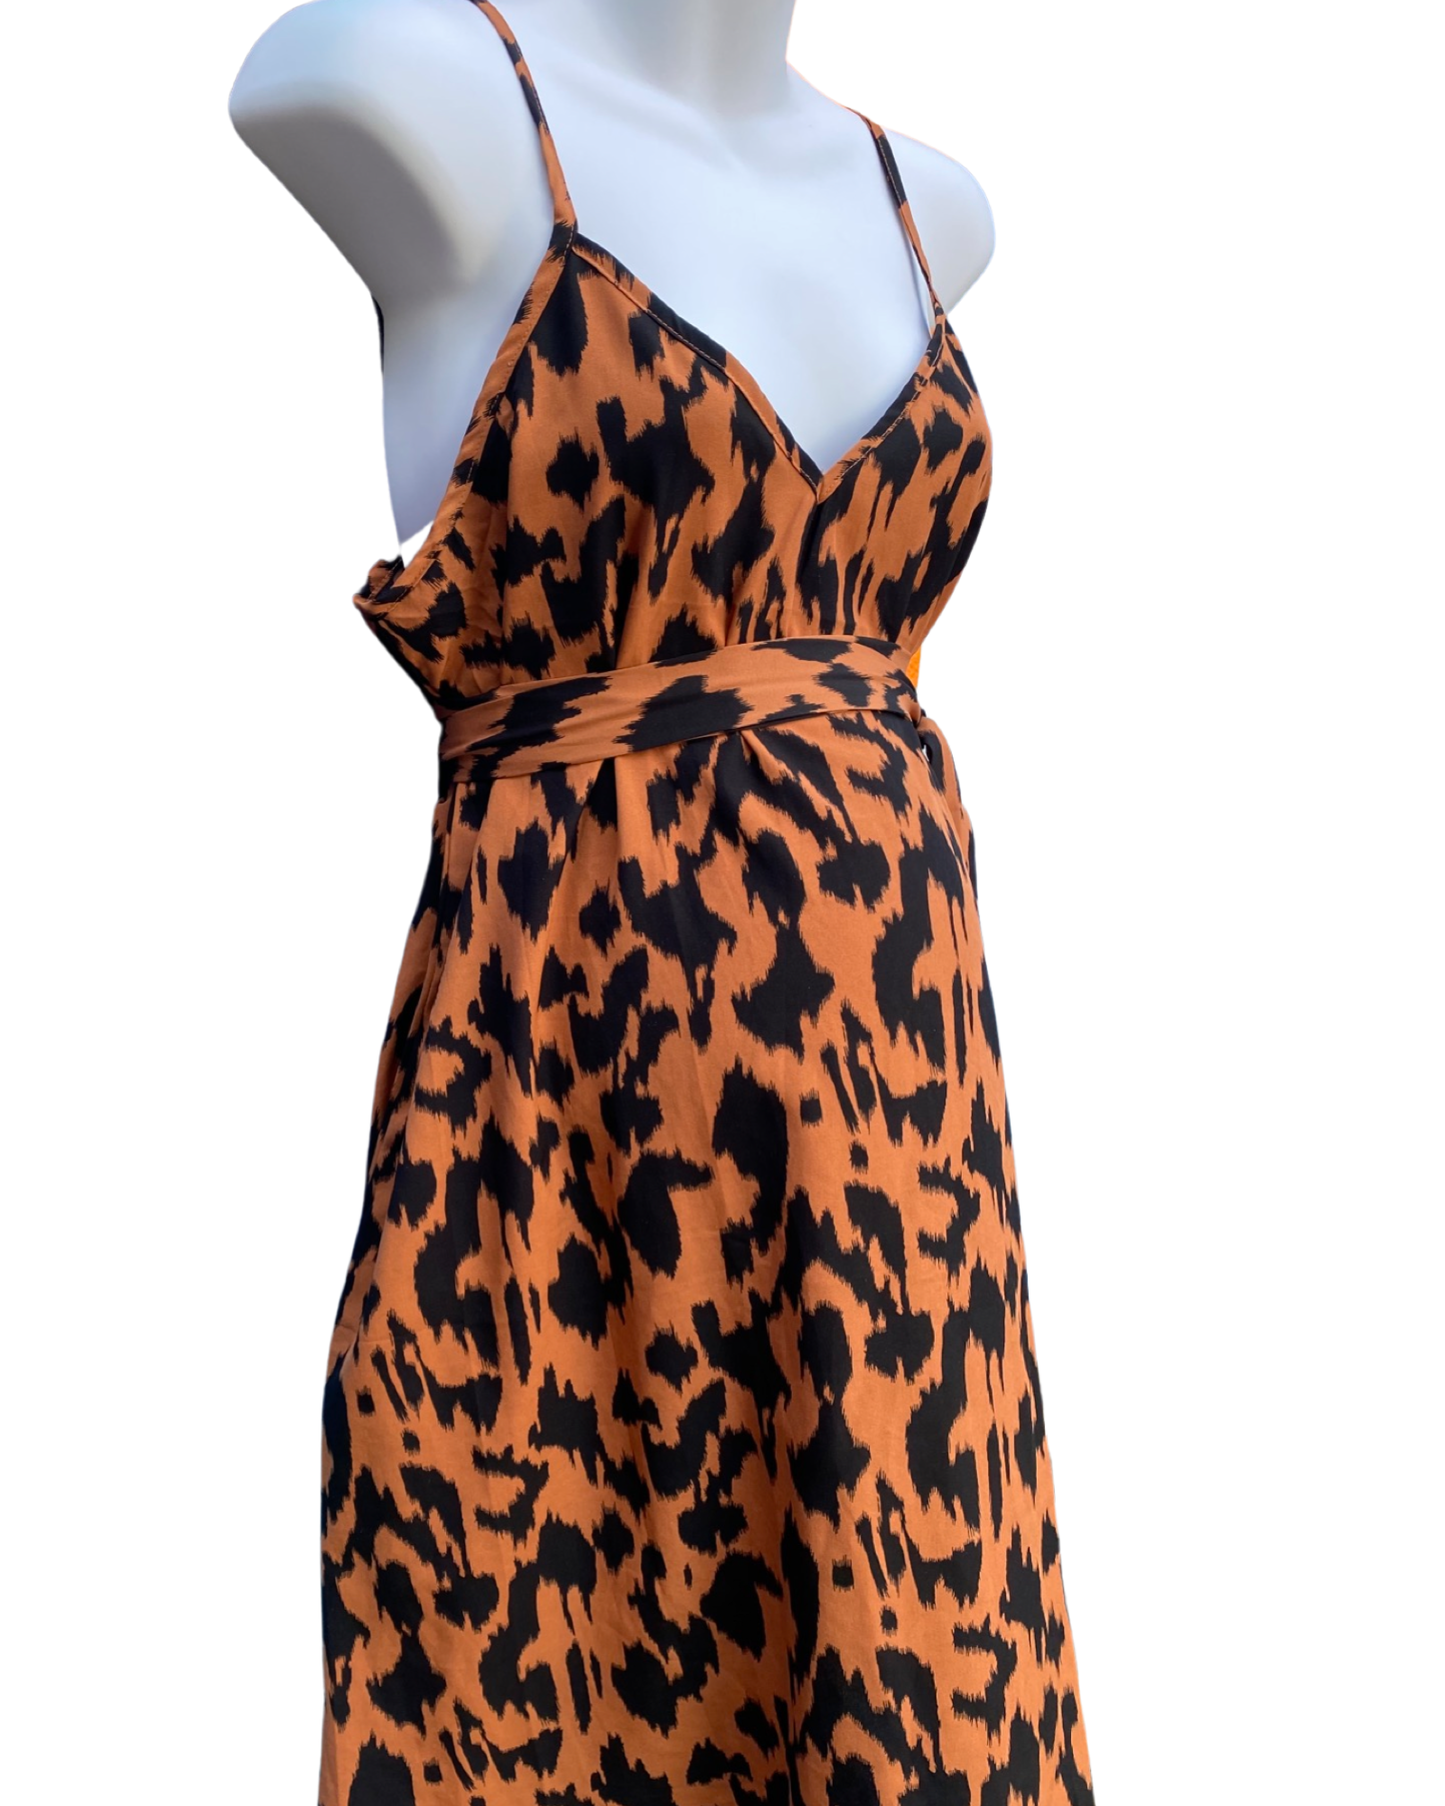 Shein maternity animal print strappy dress (size L)